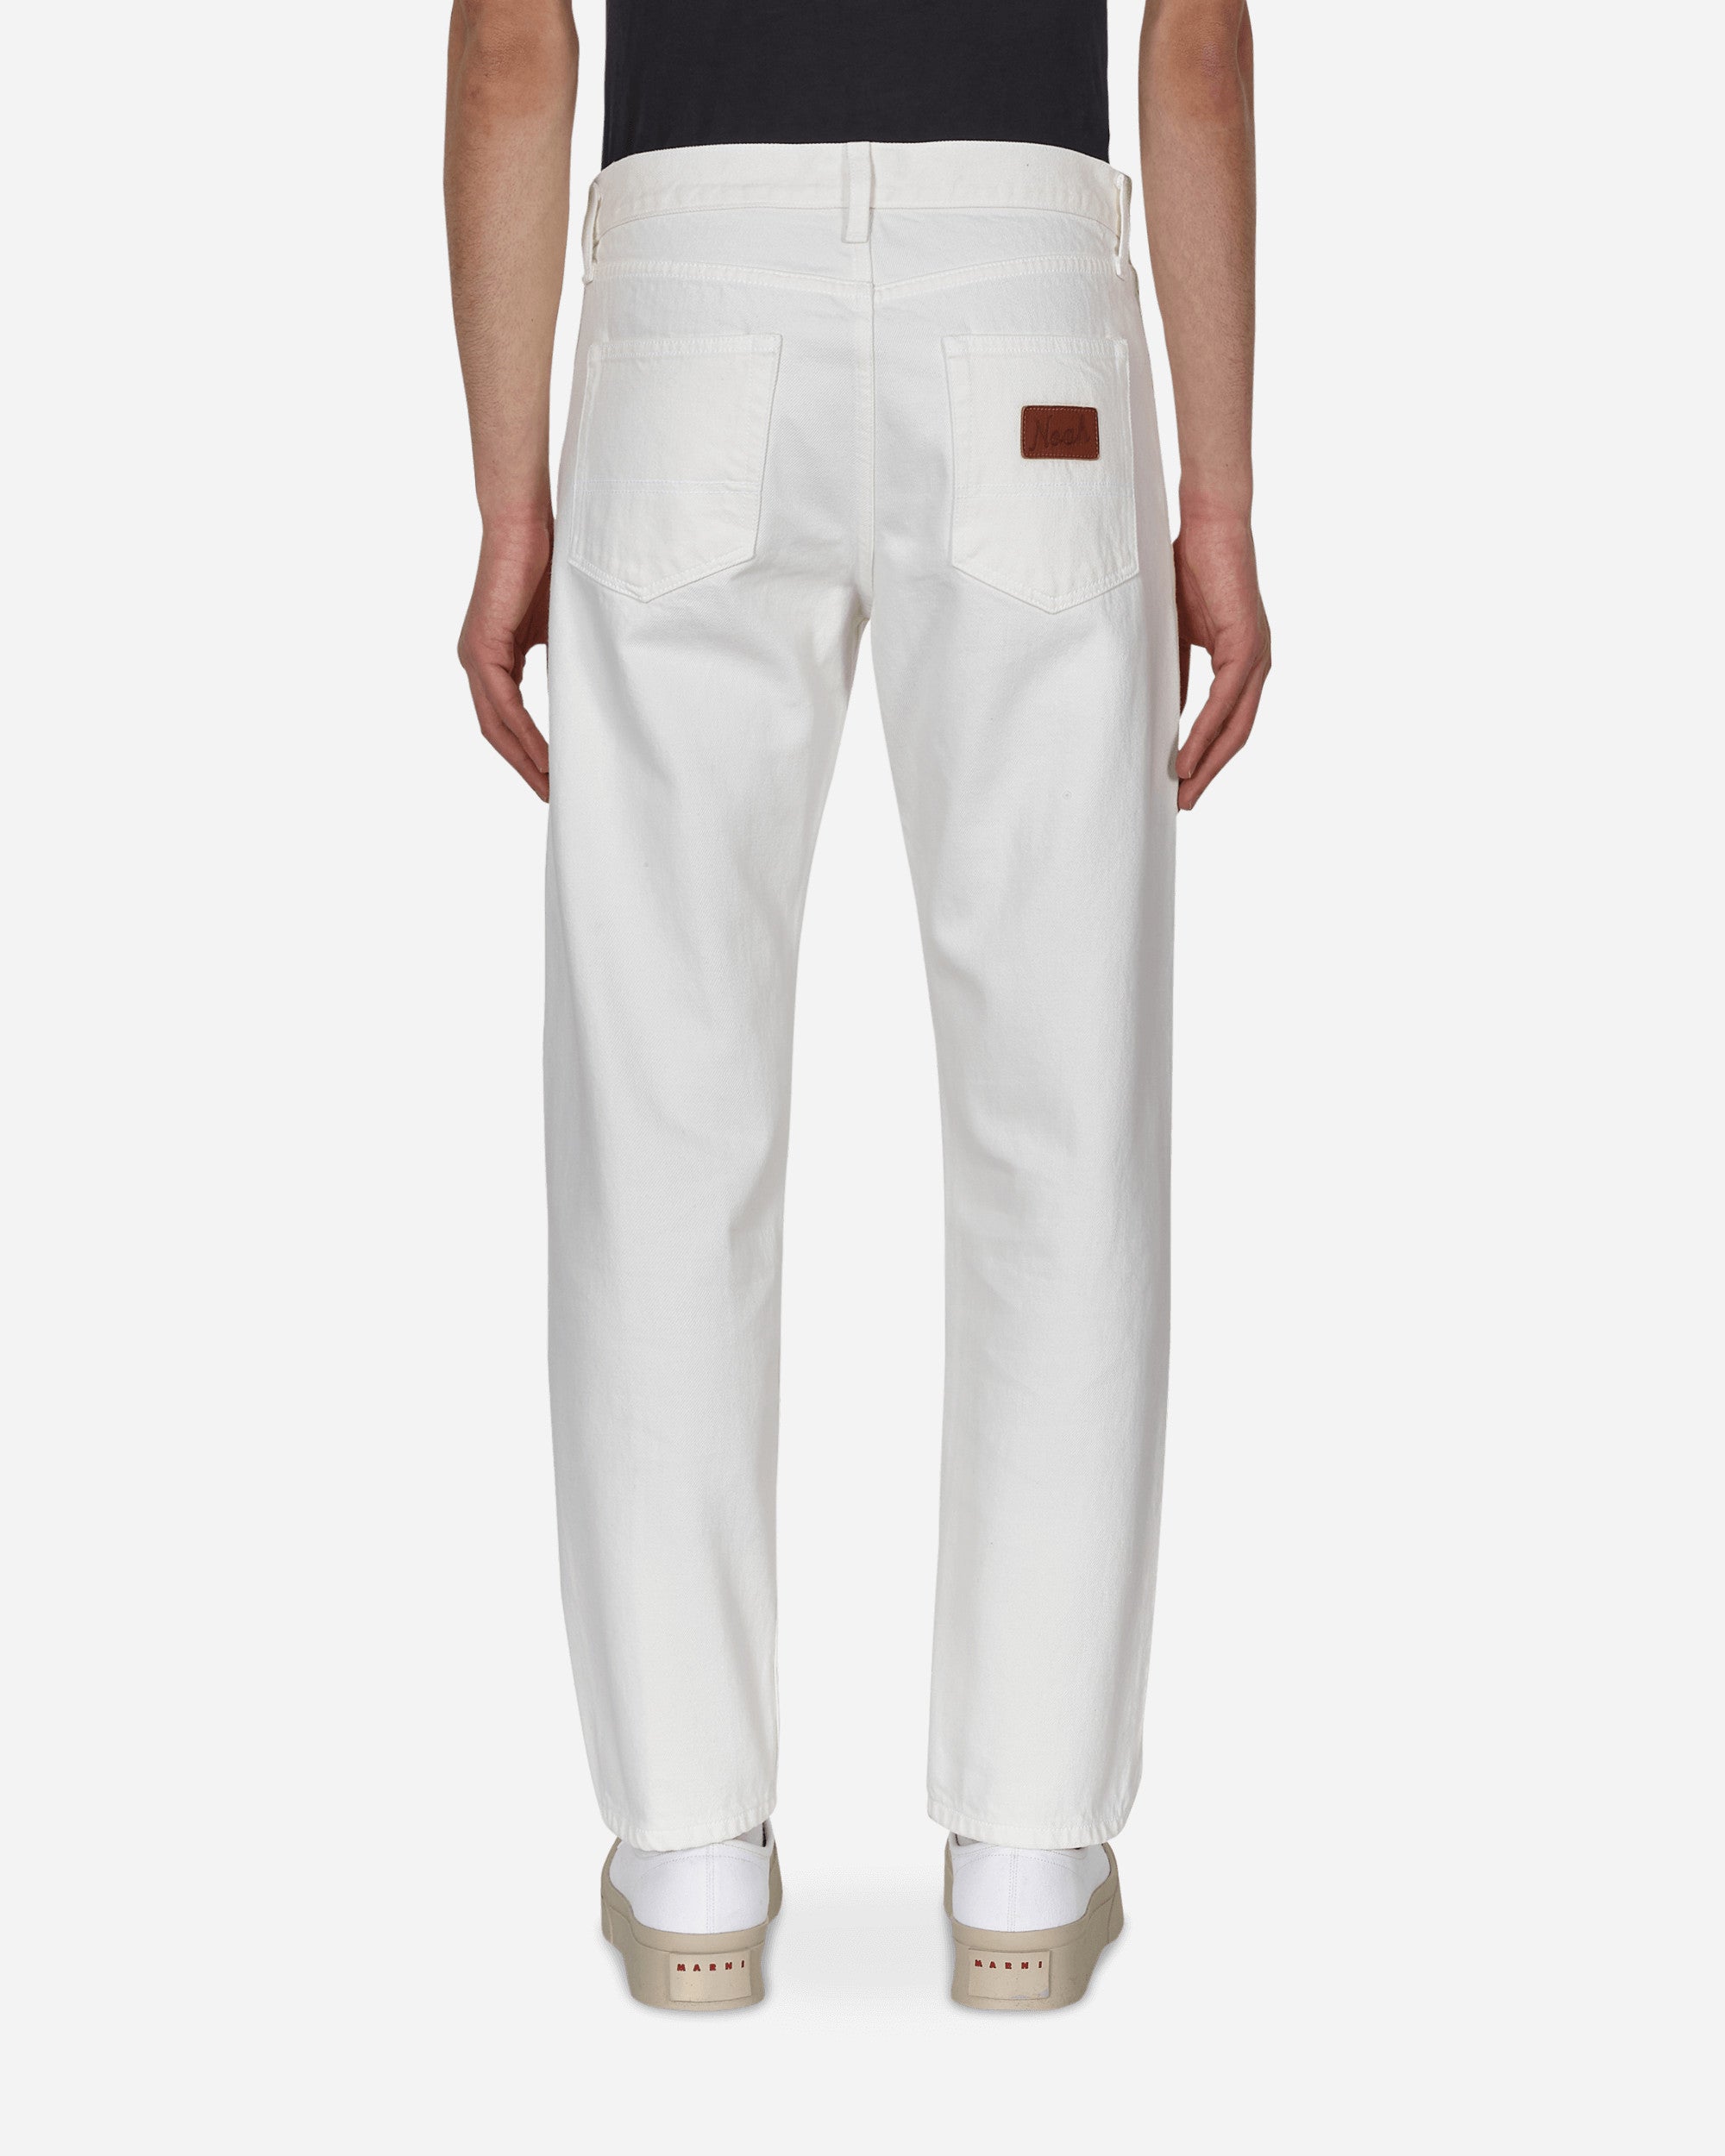 Noah 5-Pocket Jeans White Pants Denim P1NOAH WHT